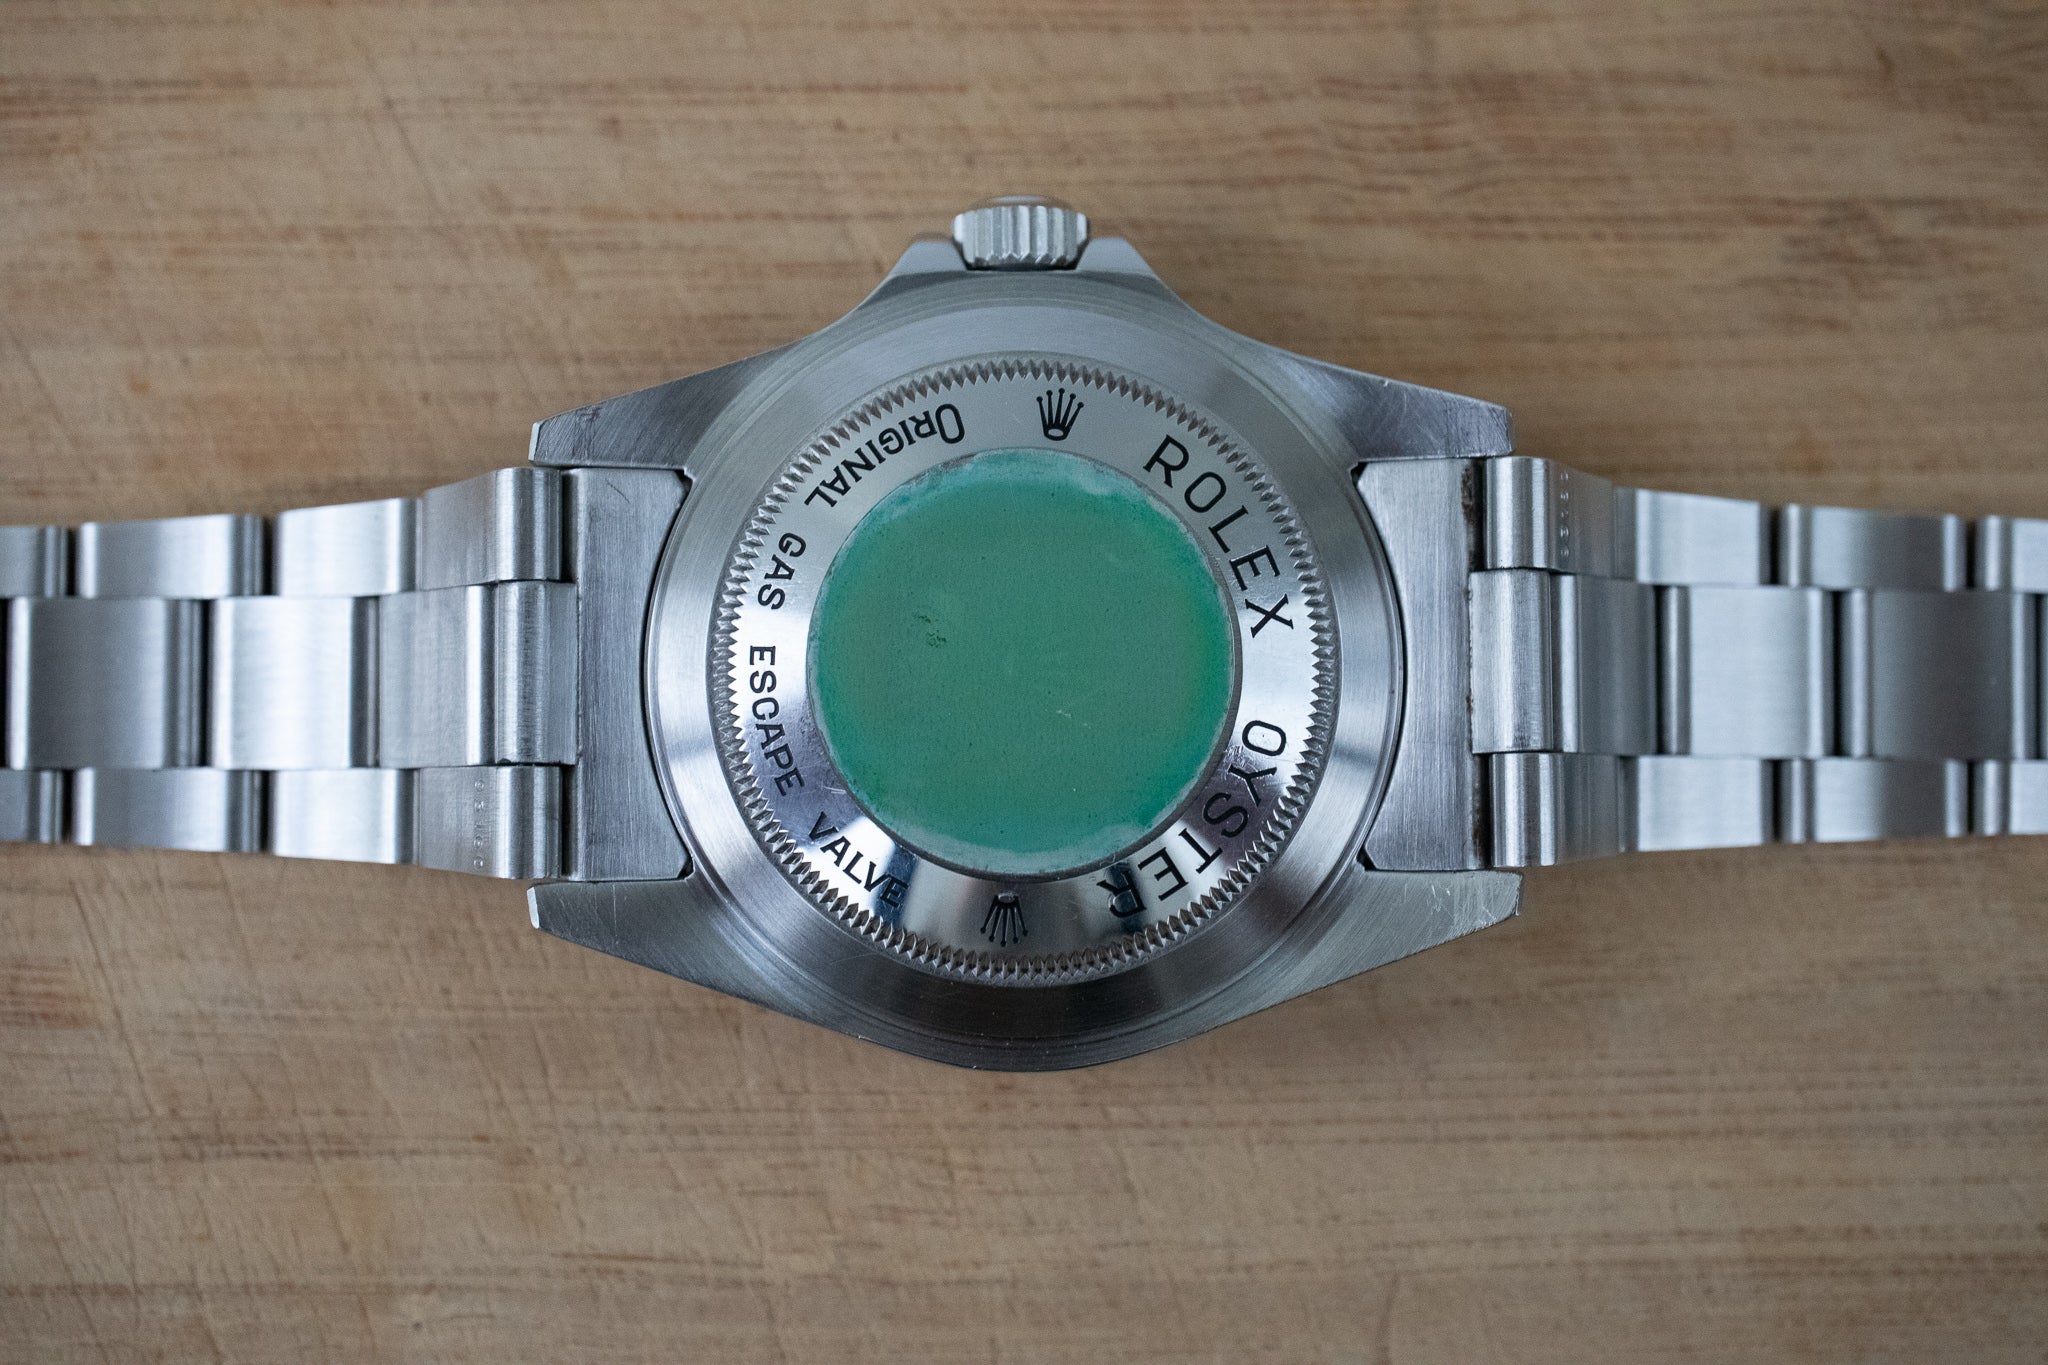 Pre-Owned: Rolex "16600 Tritium" Sea-Dweller